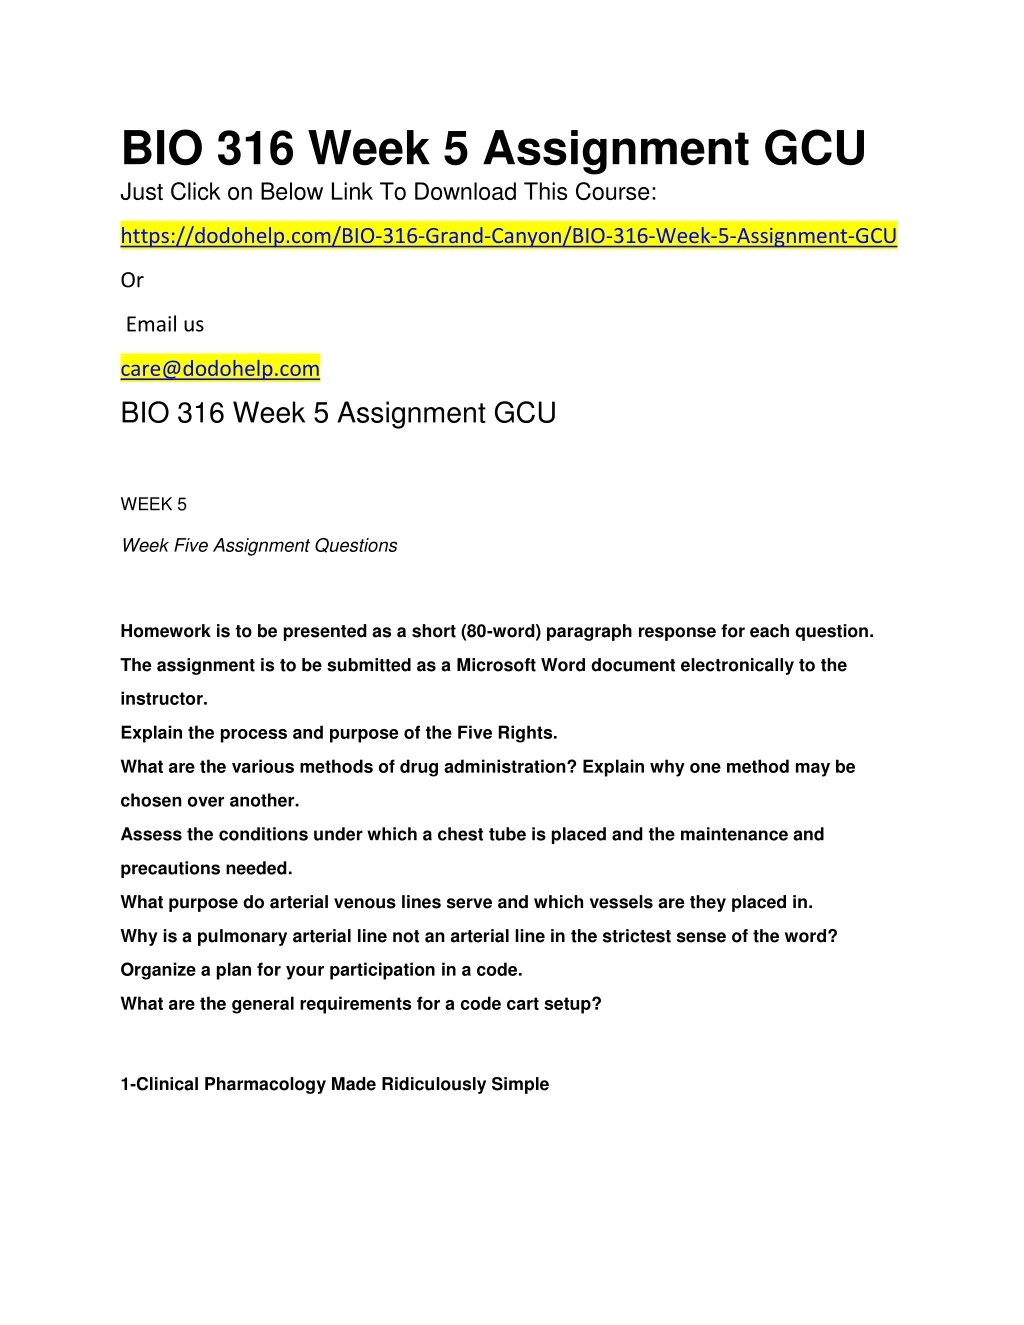 bio 316 week 5 assignment gcu just click on below